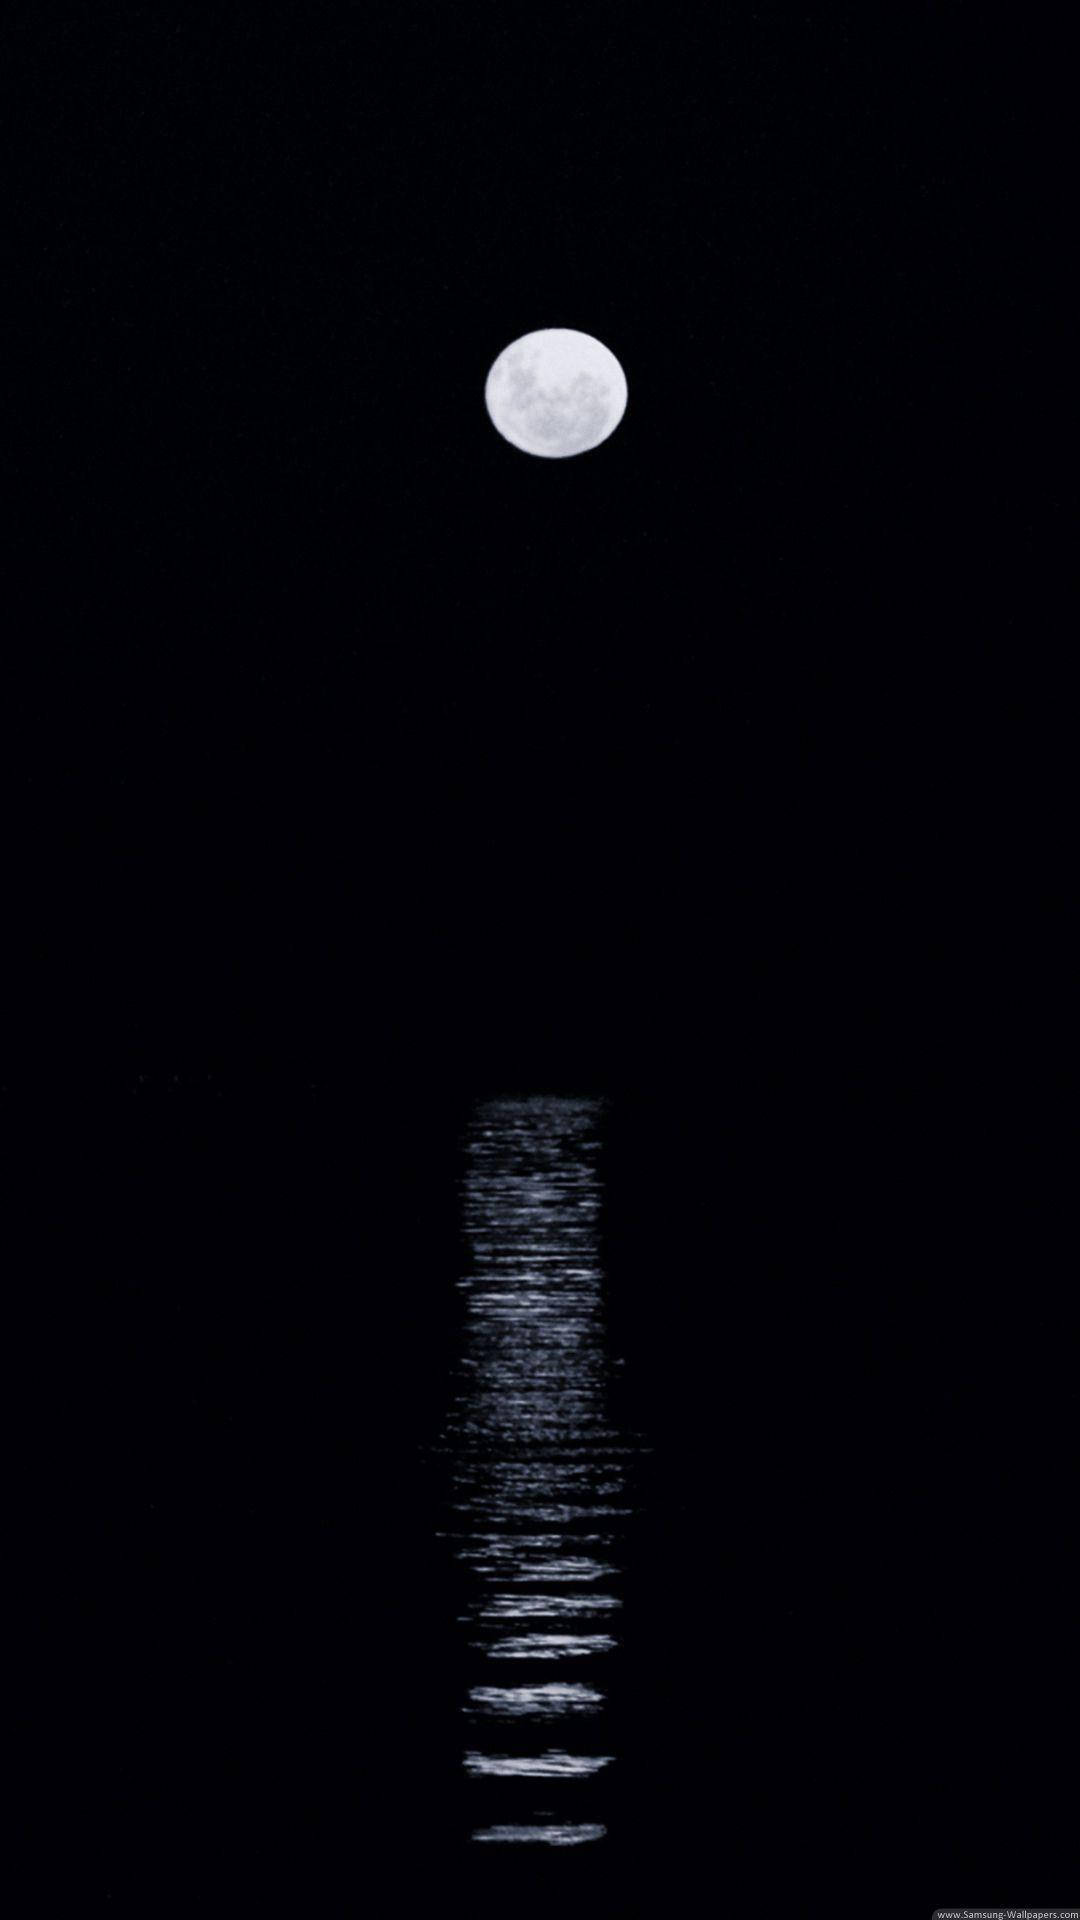 Caption: Mystical Full Moon In Dark Sky Background